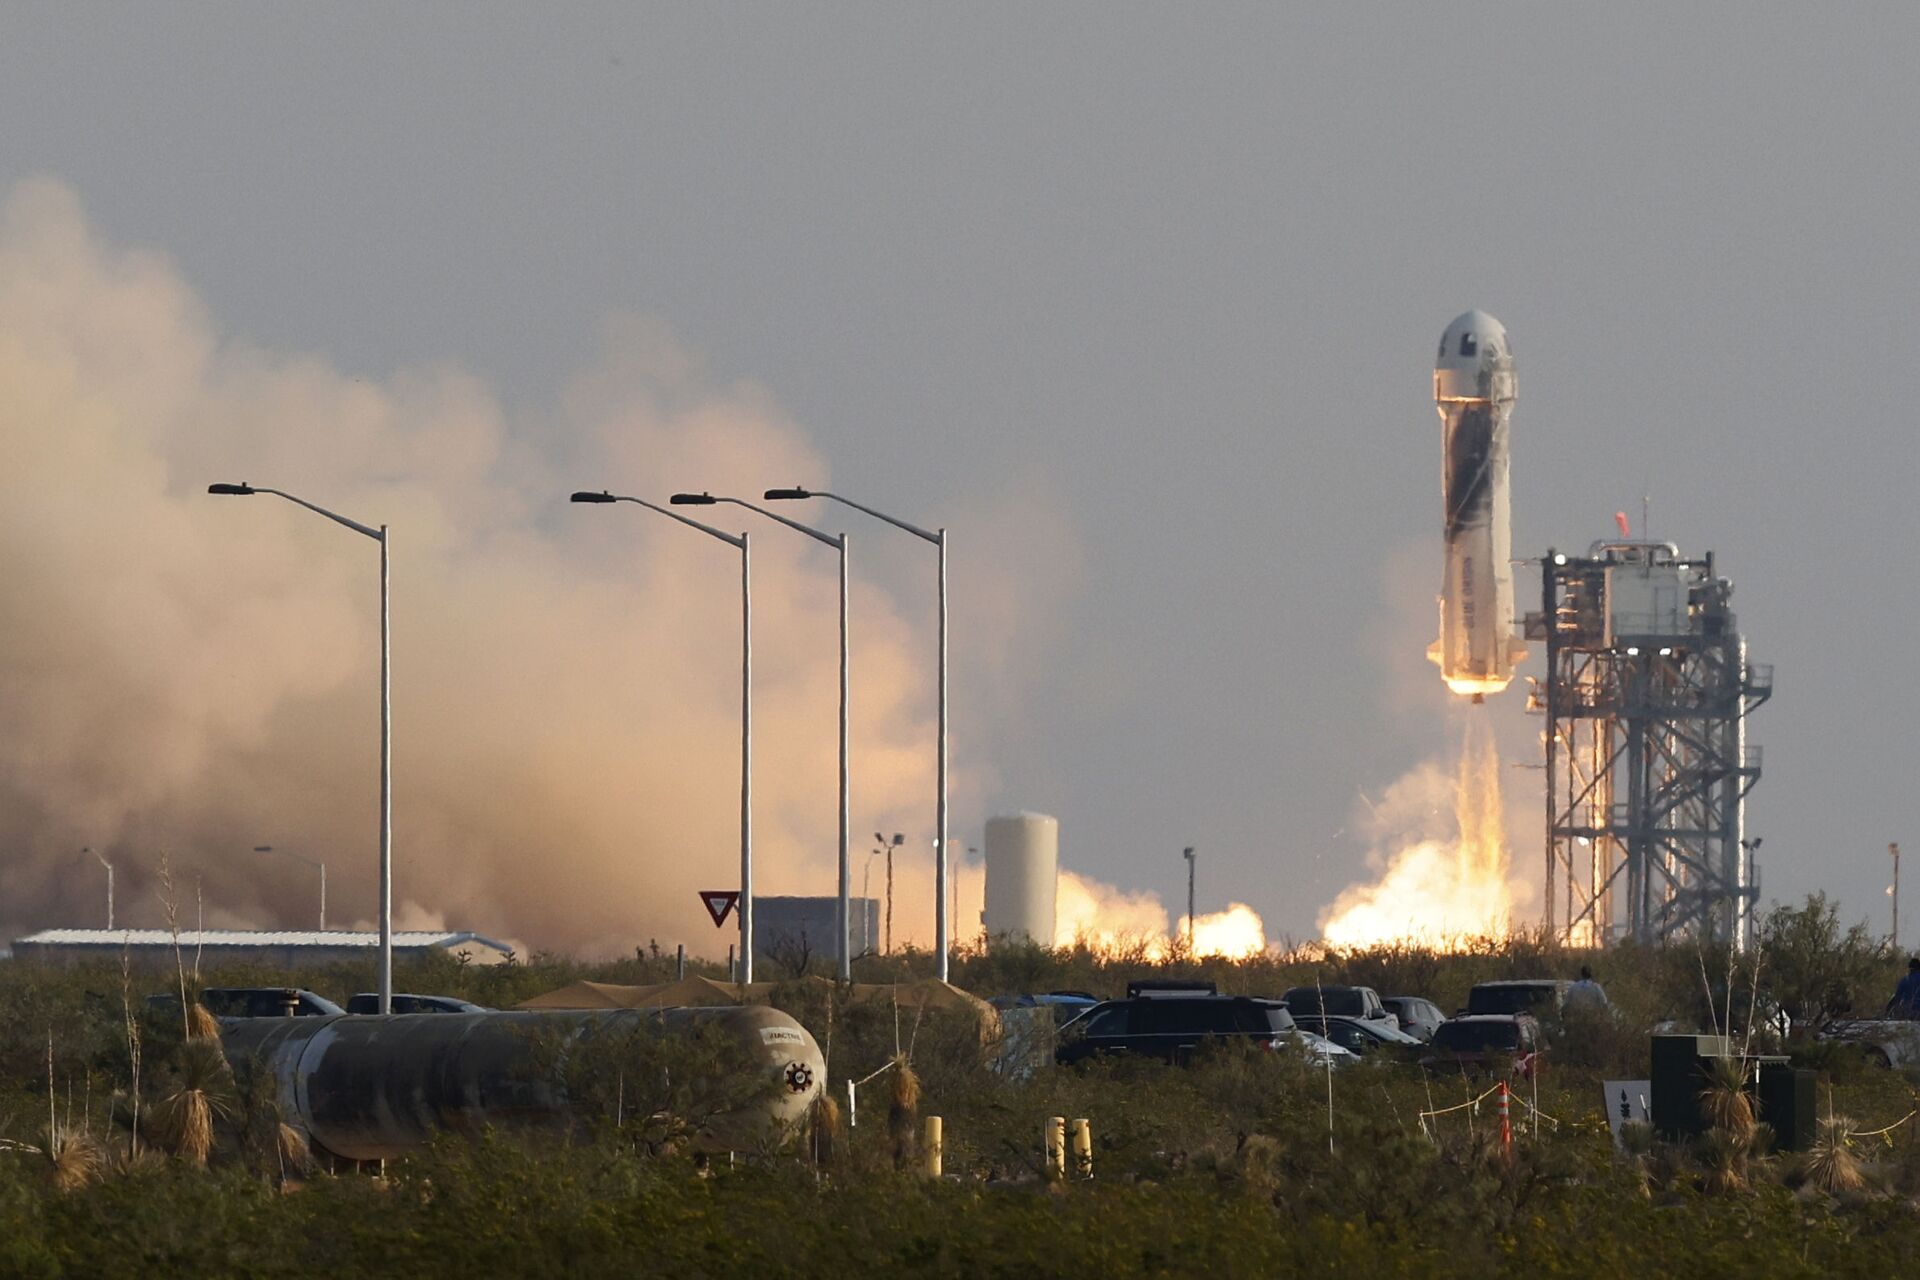 Billionaire businessman Jeff Bezos is launched with three crew members aboard a New Shepard rocket on the world's first unpiloted suborbital flight from Blue Origin's Launch Site 1 near Van Horn, Texas , U.S., July 20, 2021 - Sputnik International, 1920, 07.09.2021